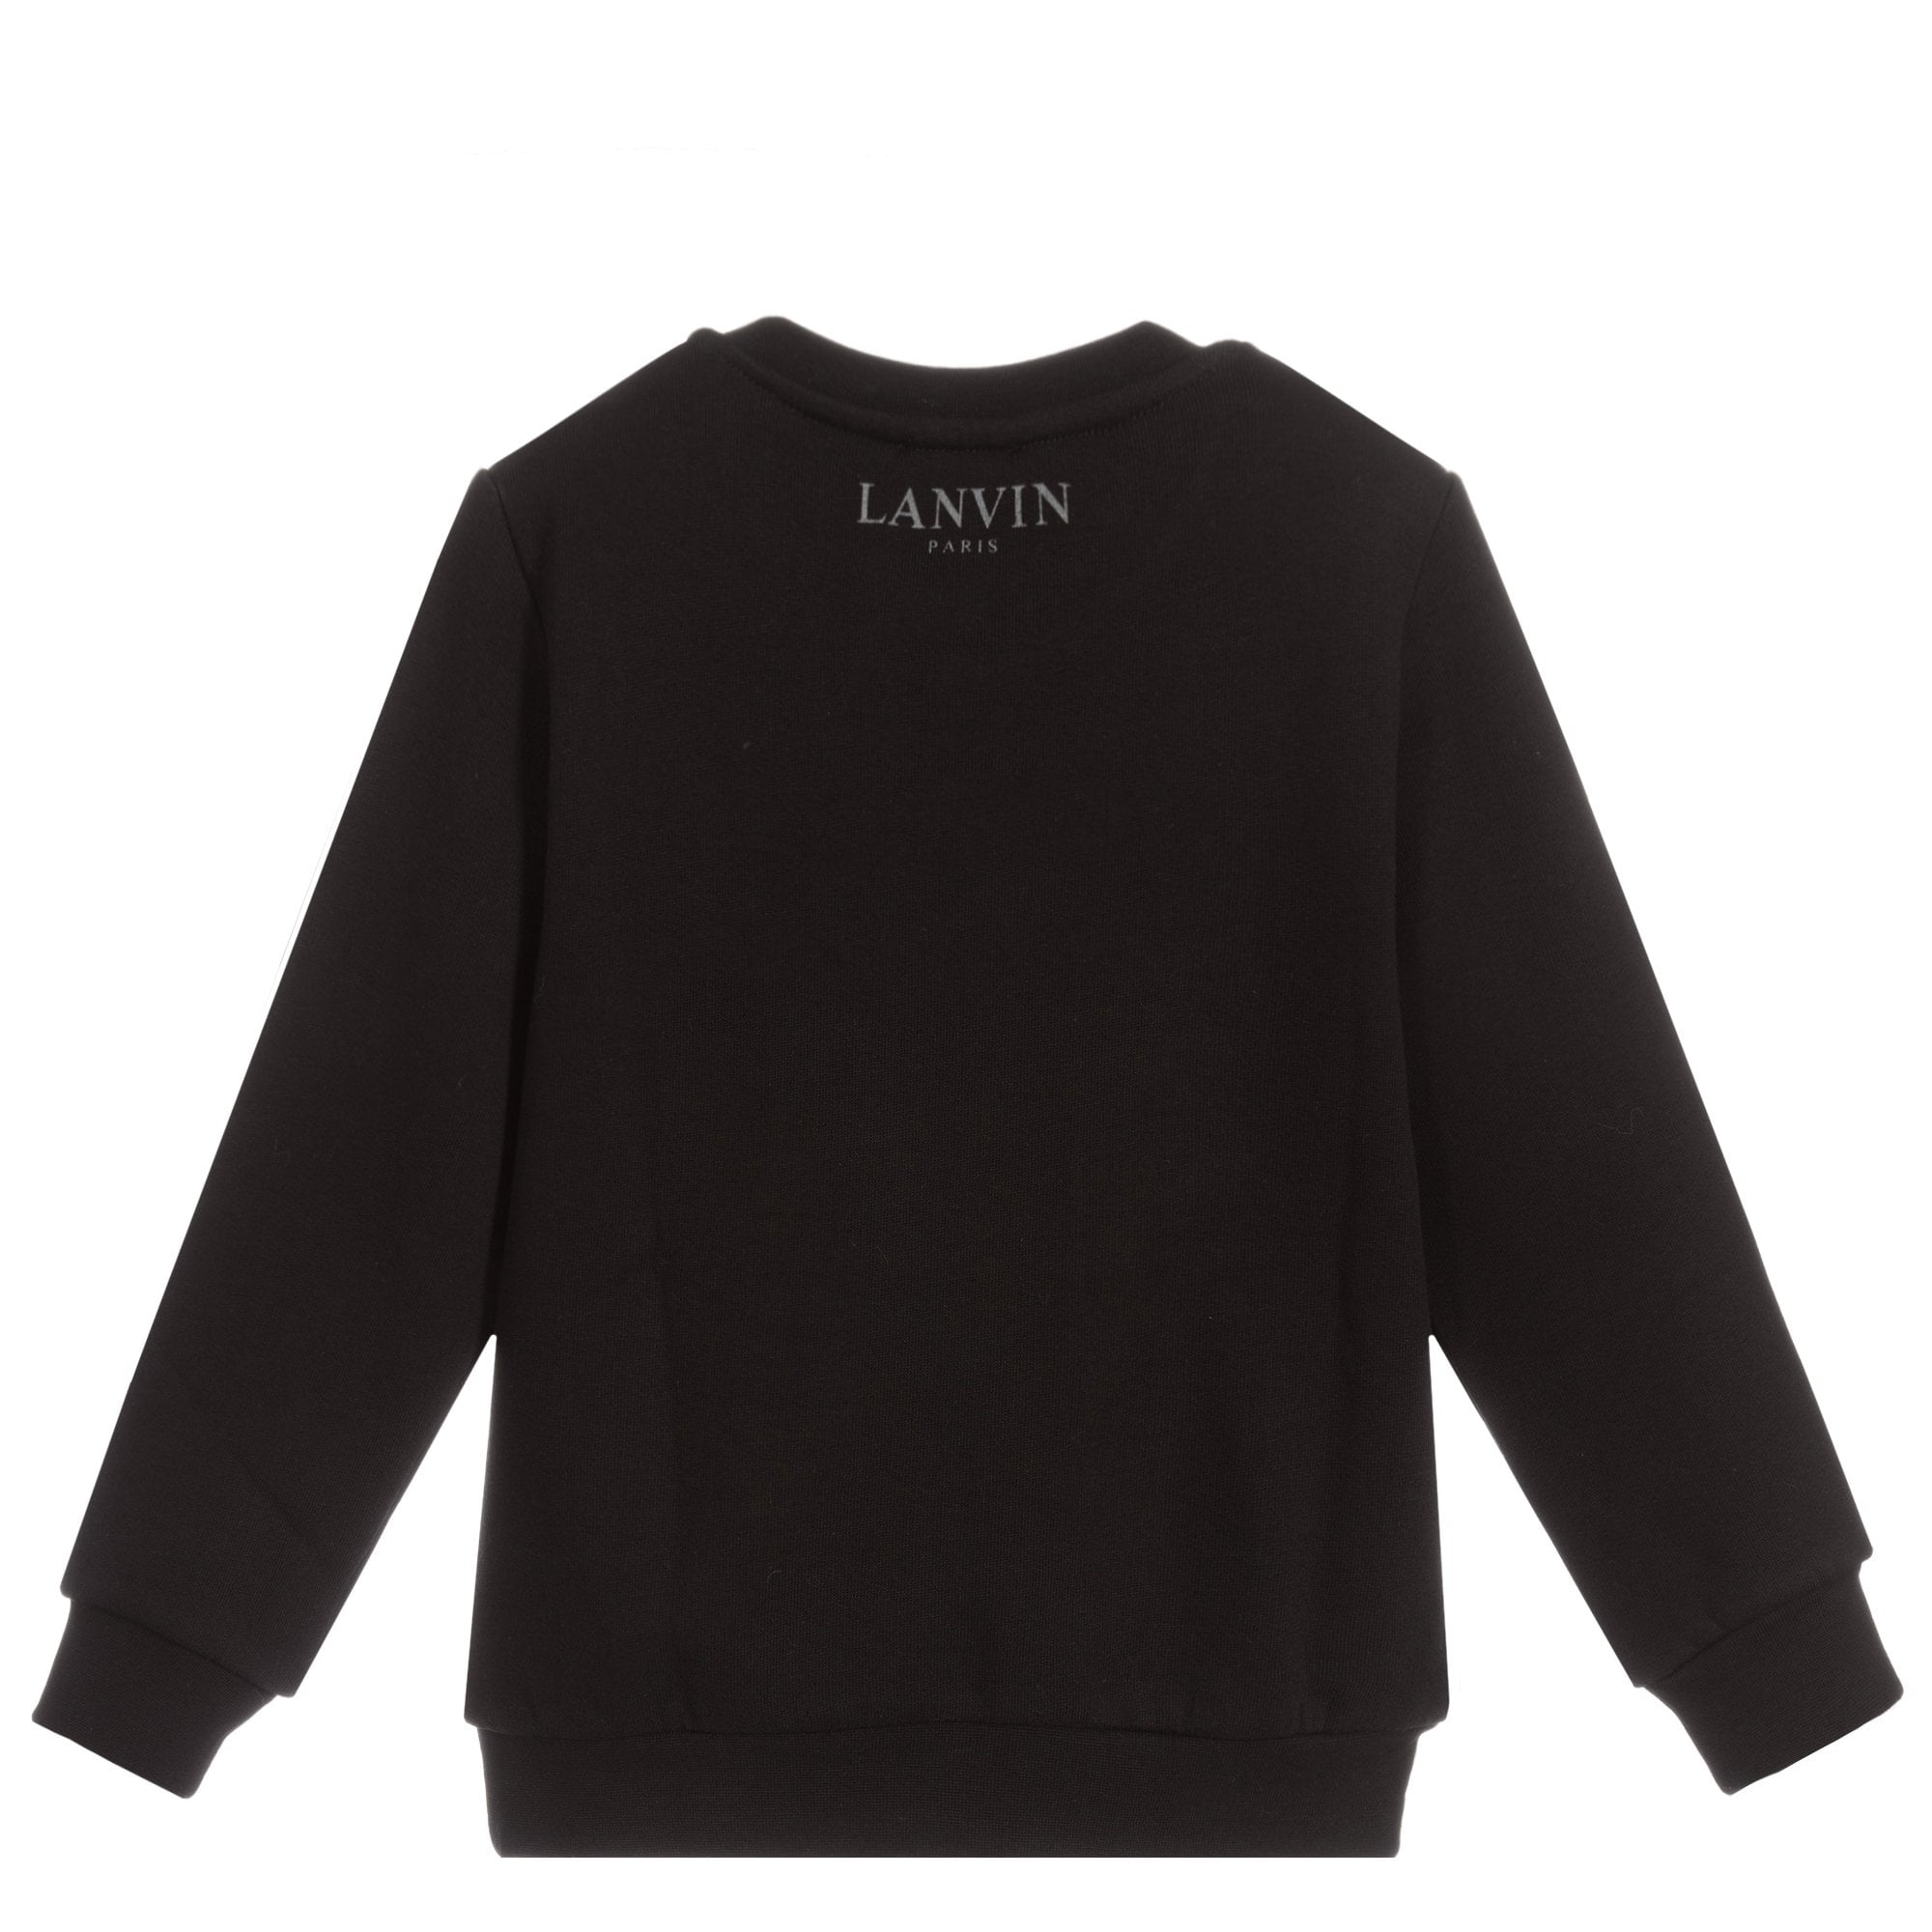 Lanvin Paris Boys Spider Sweater Black